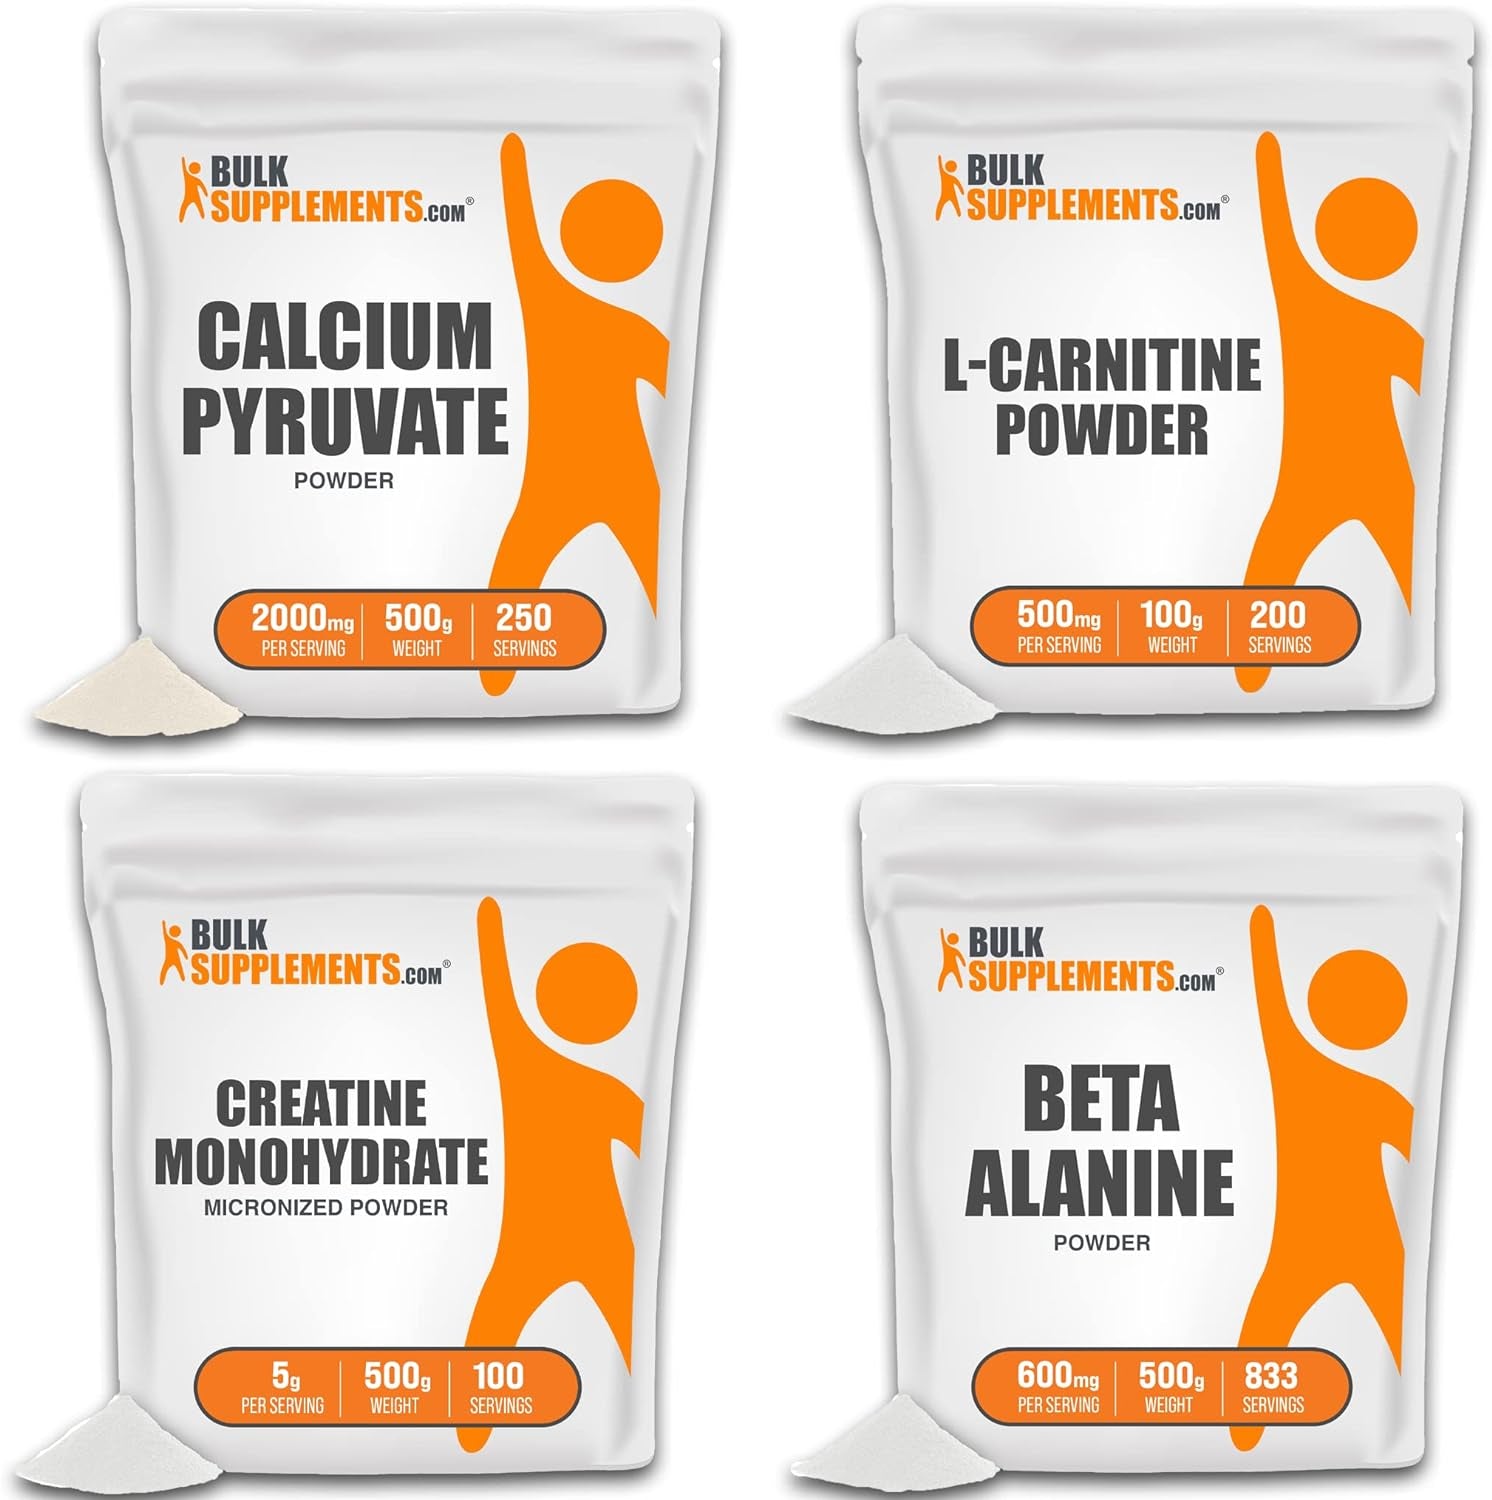 BULKSUPPLEMENTS.COM Calcium Pyruvate Powder 500G, with L-Carnitine Powder 100G, Creatine Monohydrate Powder (Micronized Creatine) 500G & Beta Alanine Powder 500G Bundle